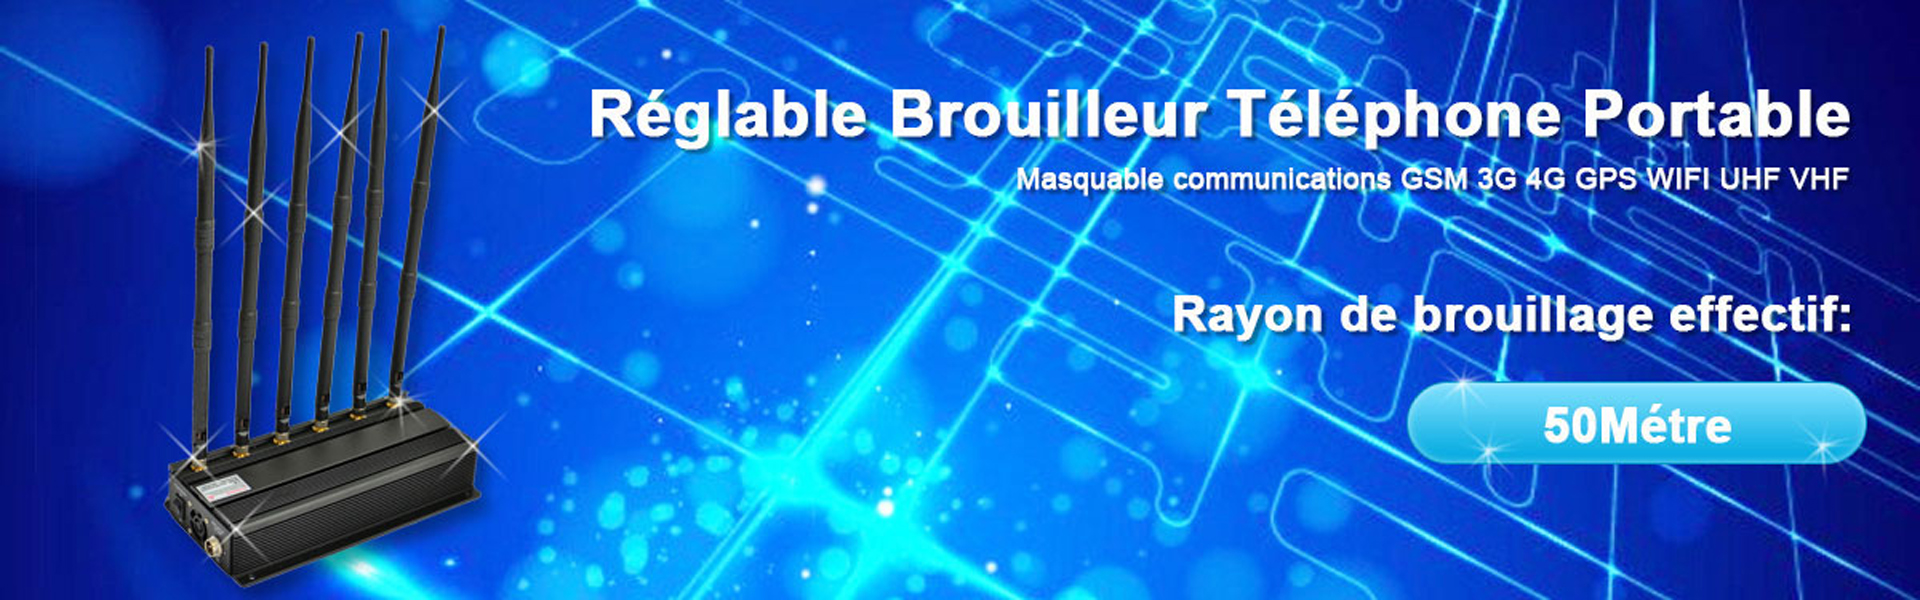 Portable Brouilleur